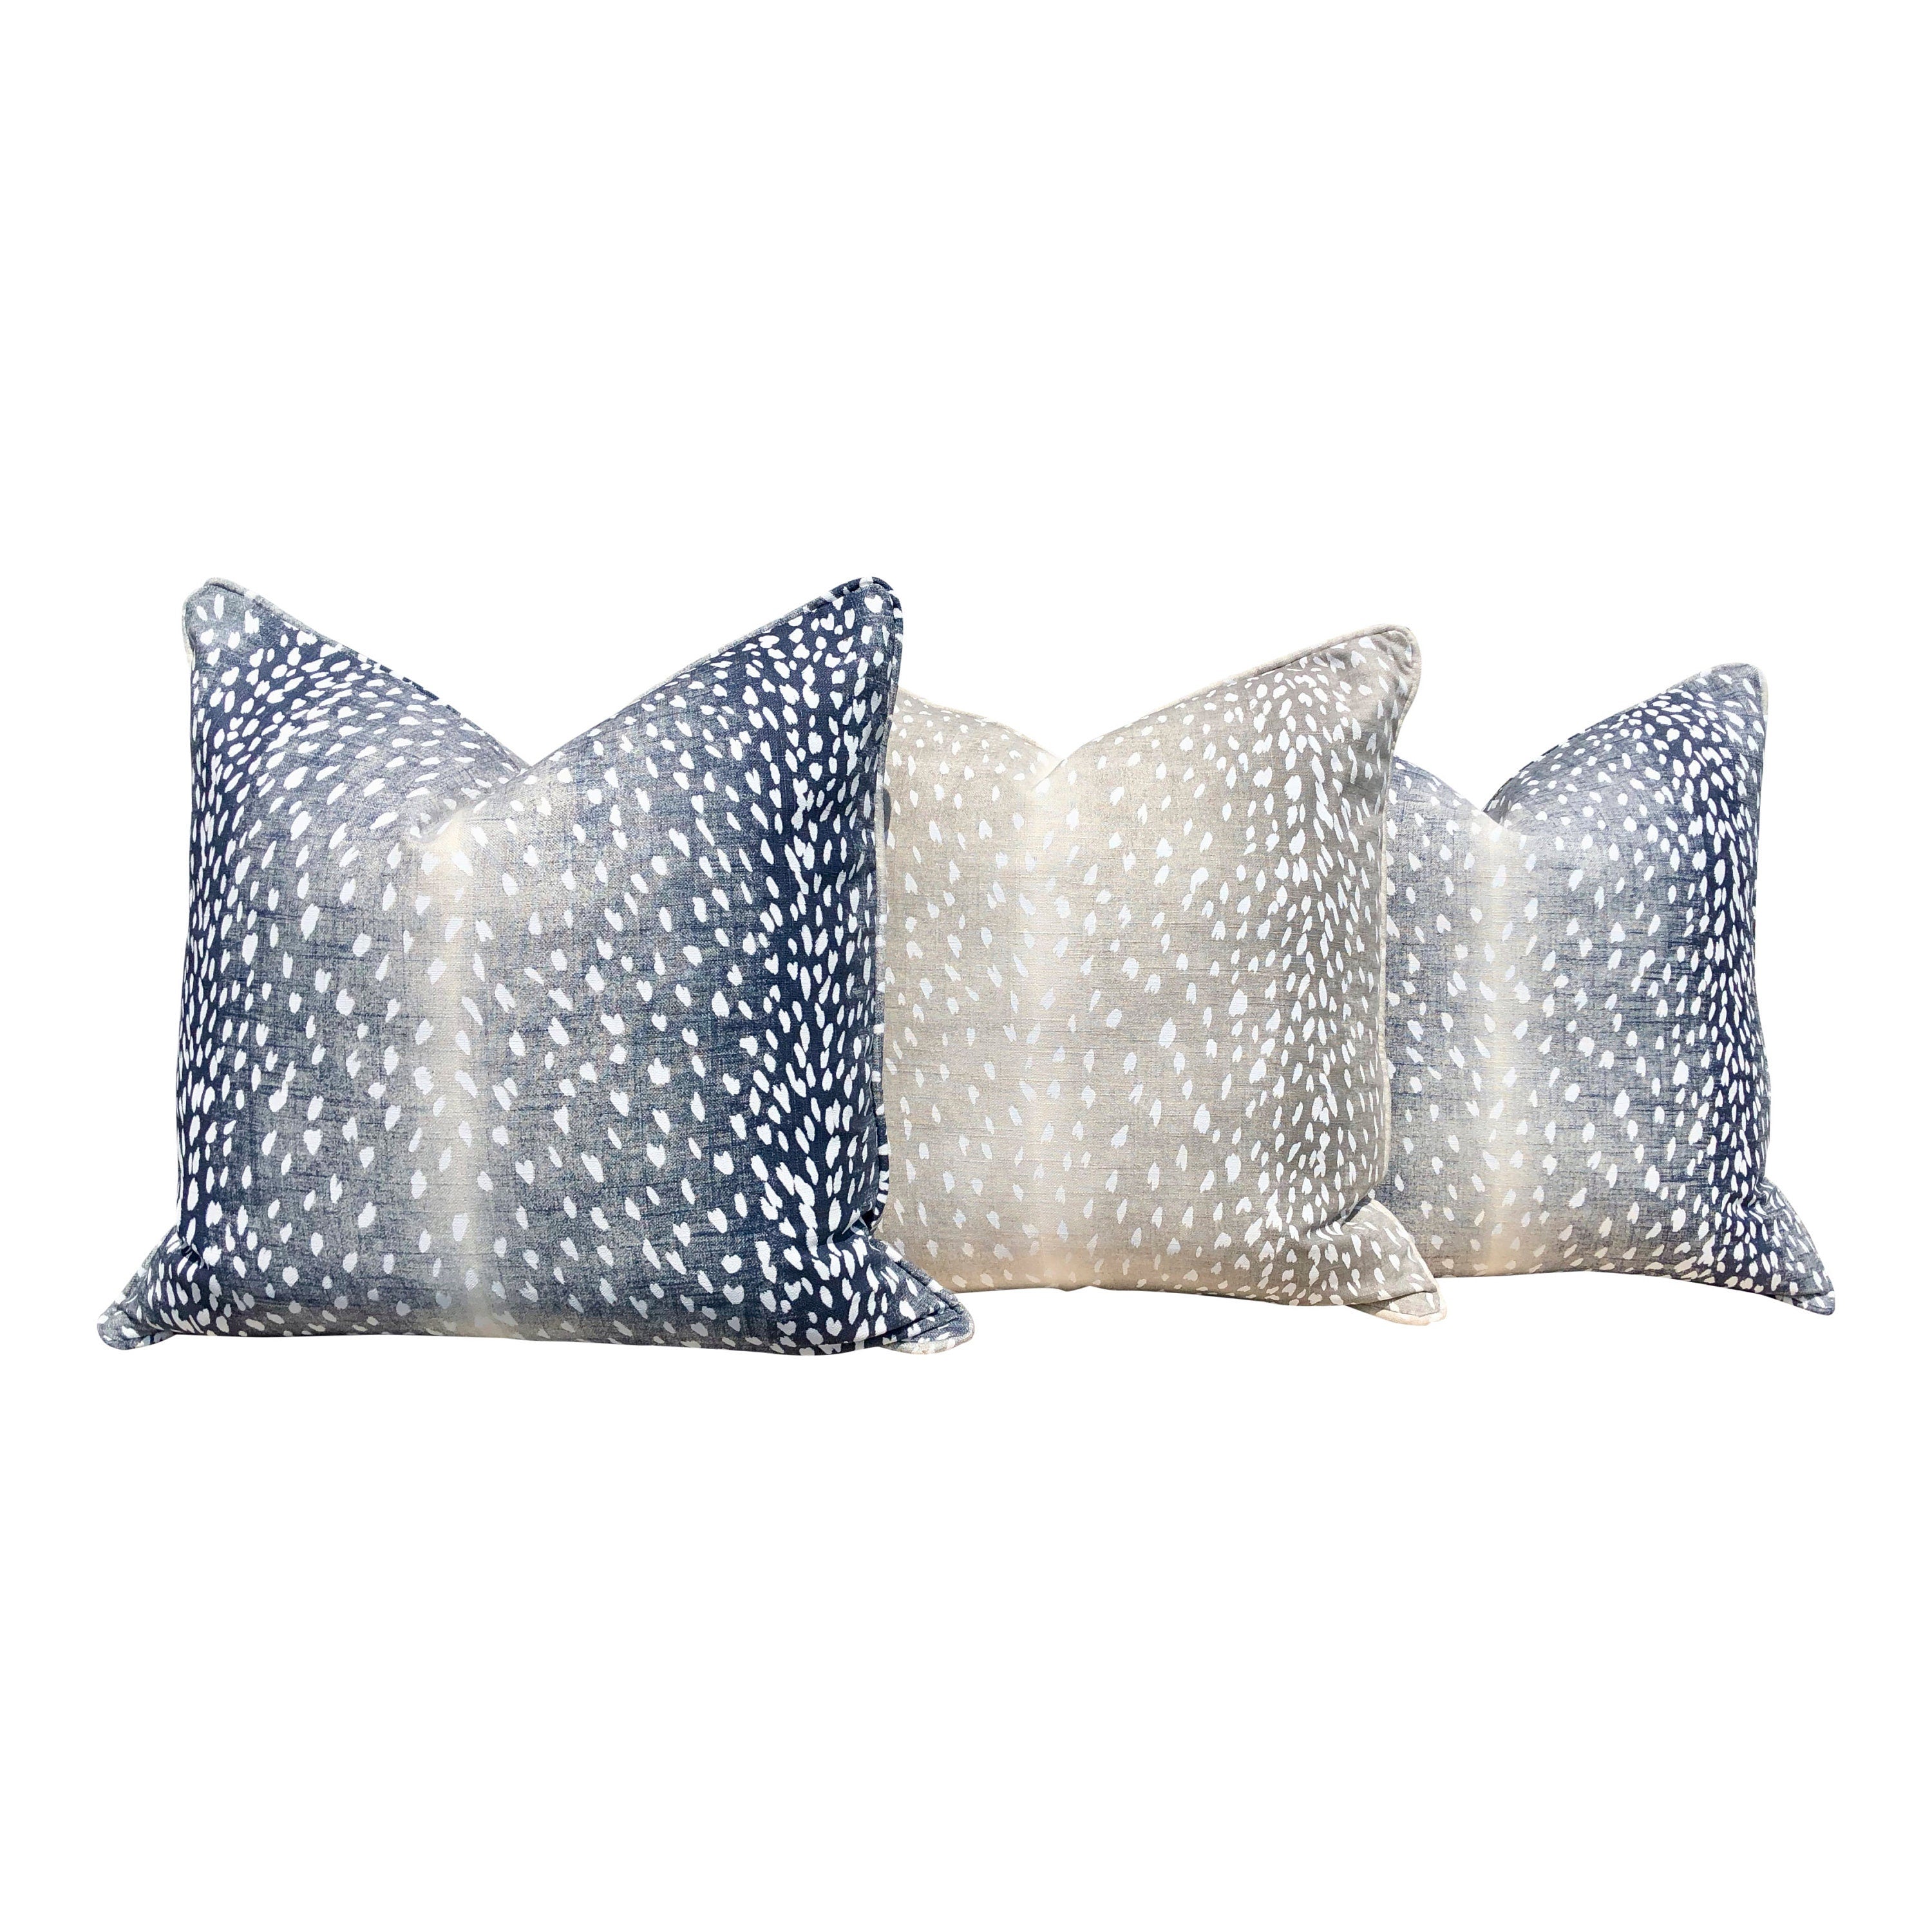 Beige Antelope Pillow. Long Lumbar Pillow // Animal Skin Pillow // Spotted Pillow Cover // Designer Pillow // Euro Sham 26x26